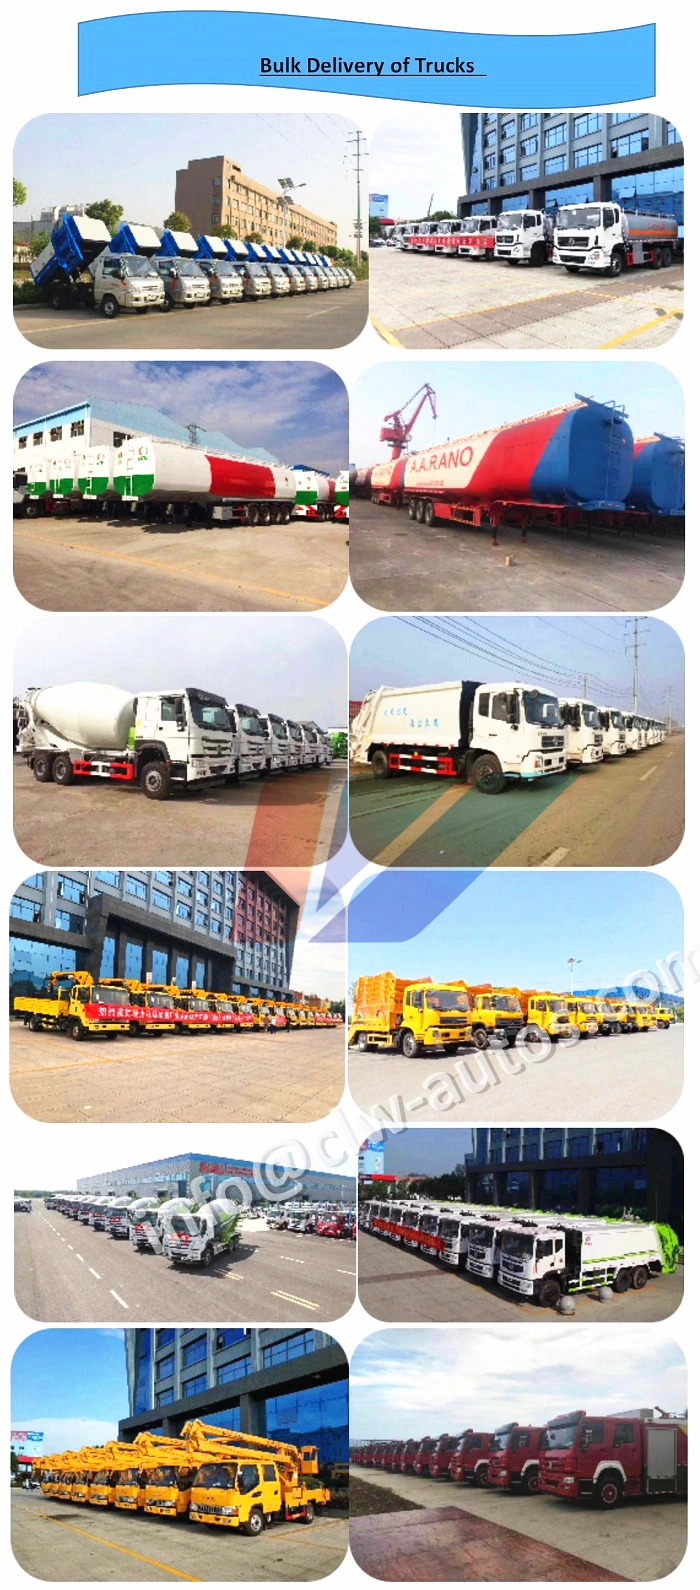 Dongfeng 4X2 5m3 5000L Fuel Dispenser Truck Oil Refueling Truck